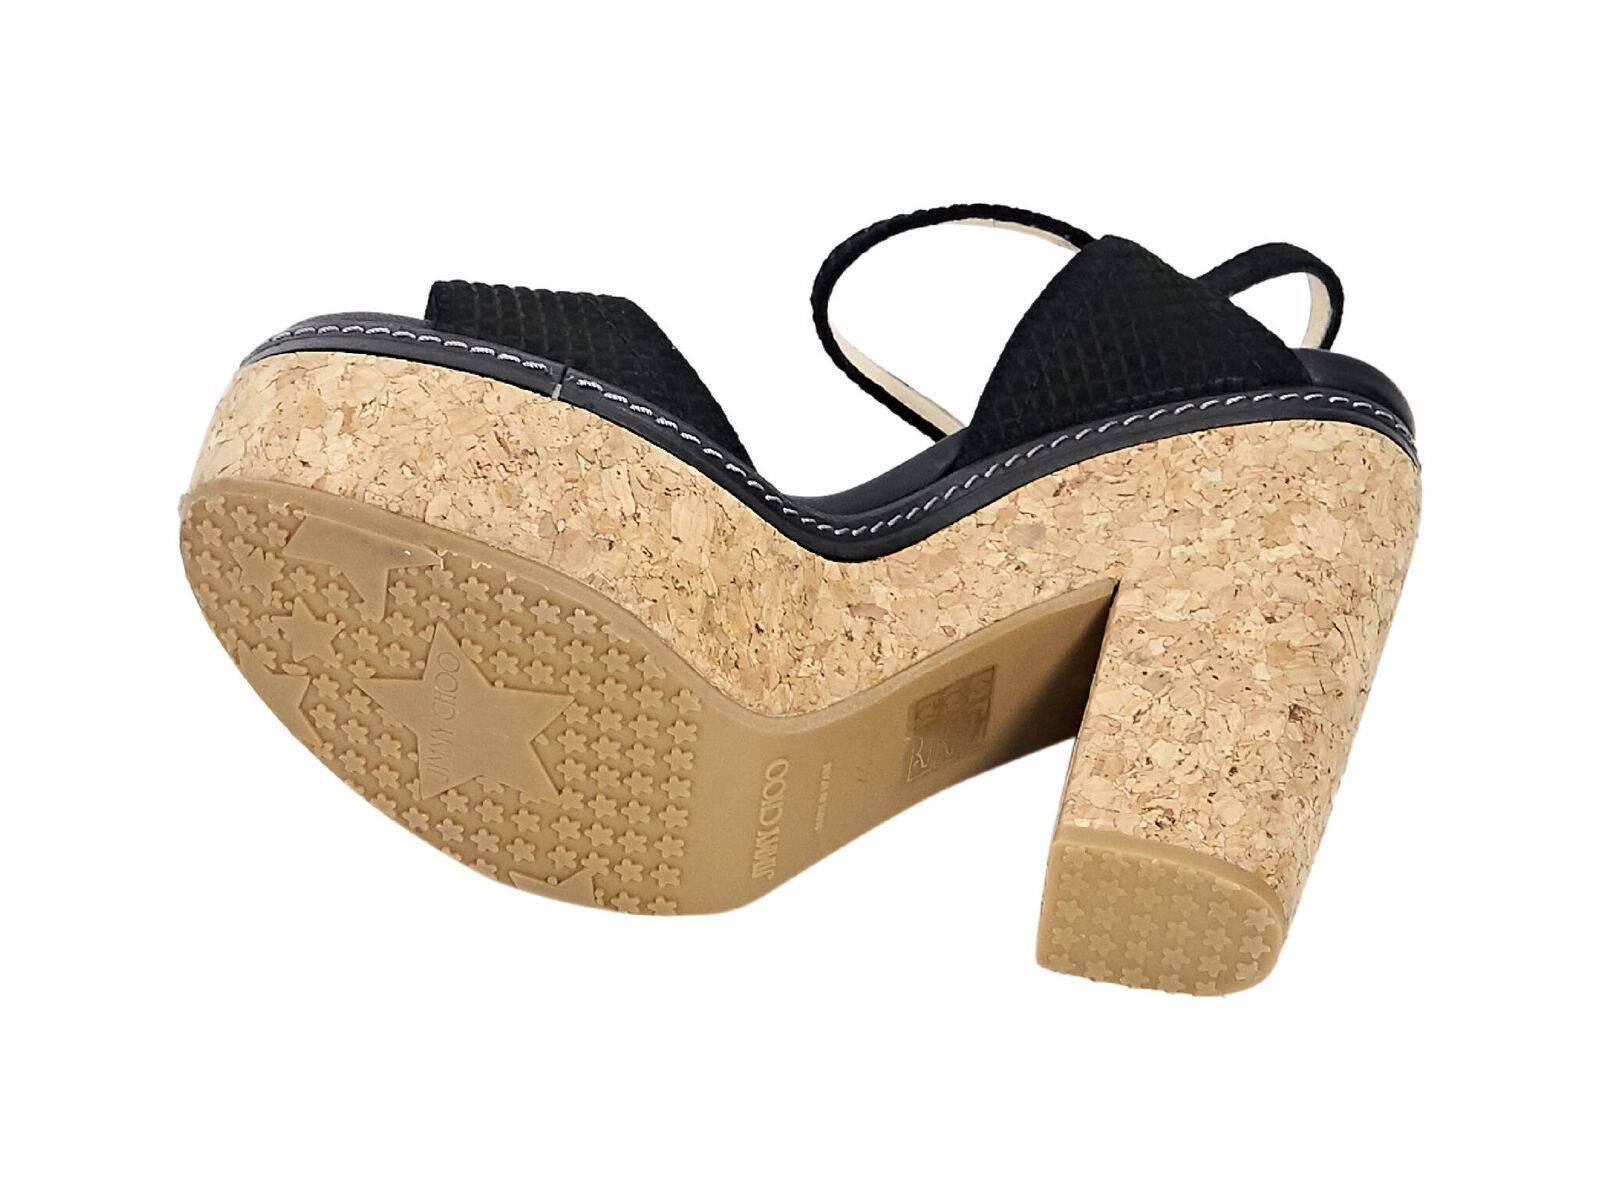 Product details:  Black suede platform sandals by Jimmy Choo.  Adjustable ankle strap.  Open toe.  Chunky cork heel and platform.  EU size 41.  5